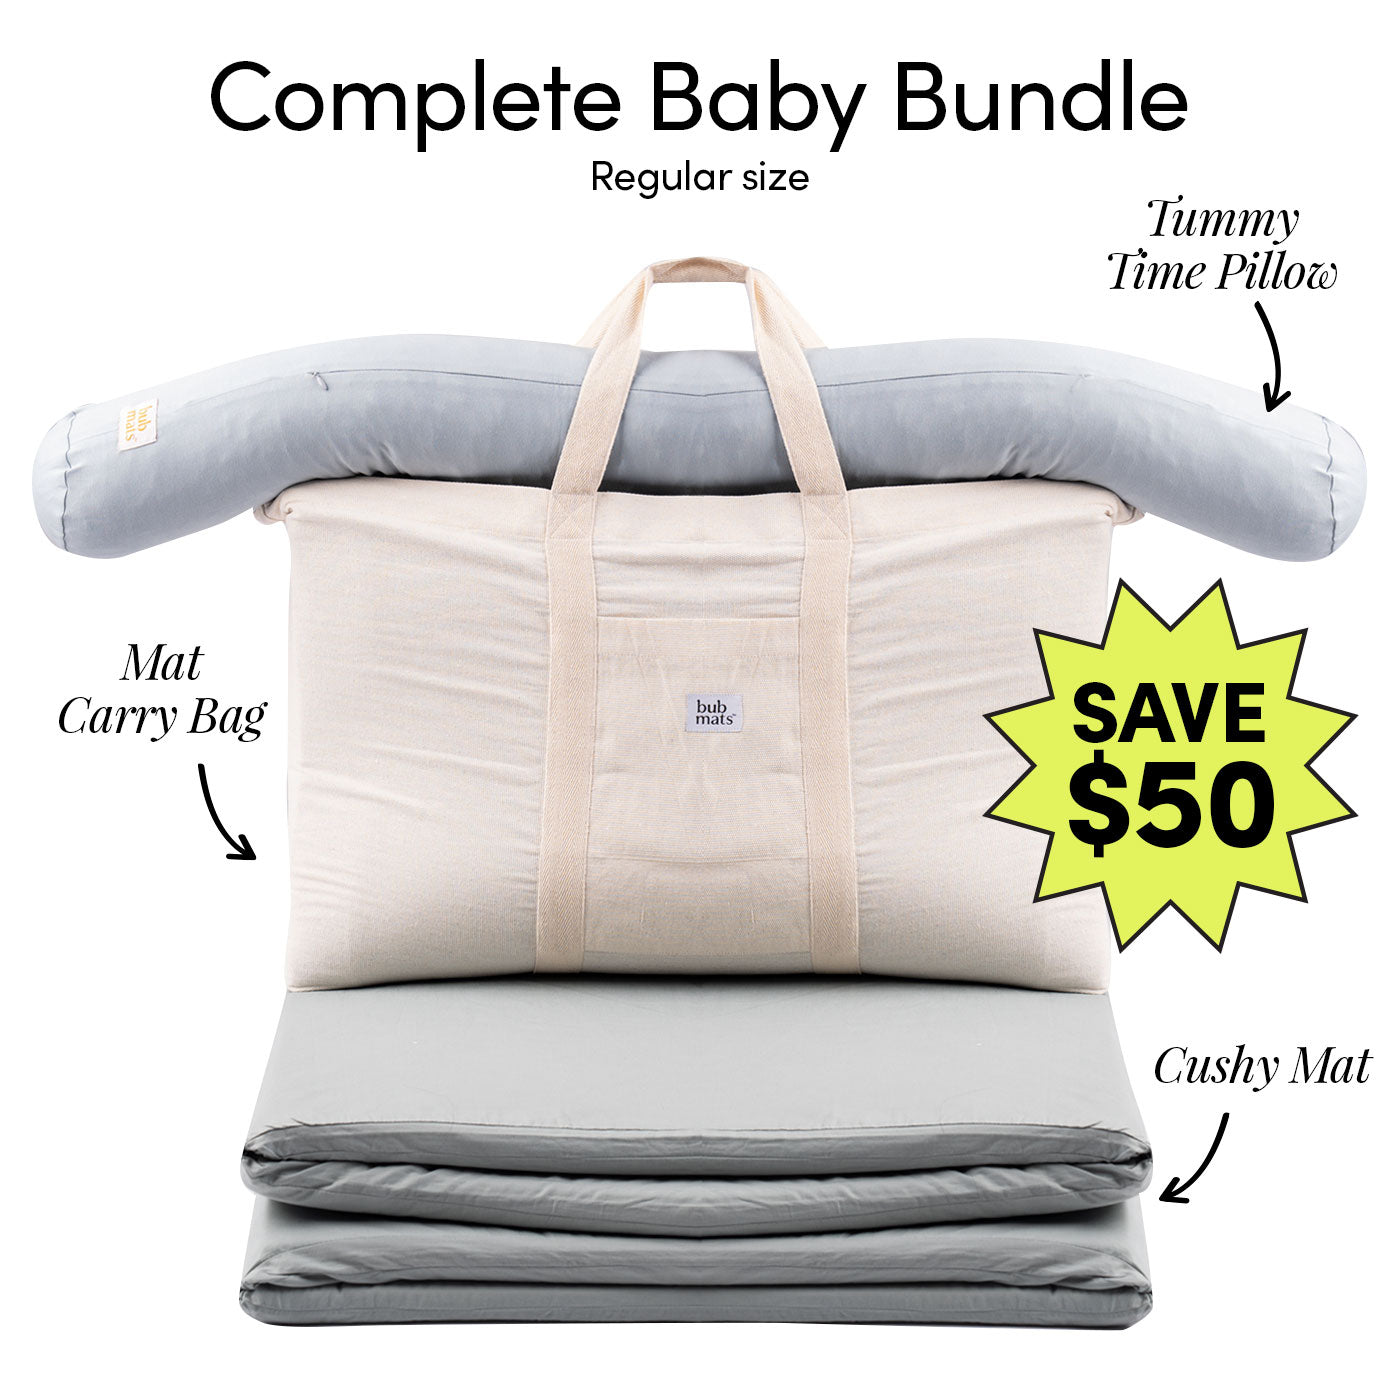 The Complete Baby Bundle · Regular